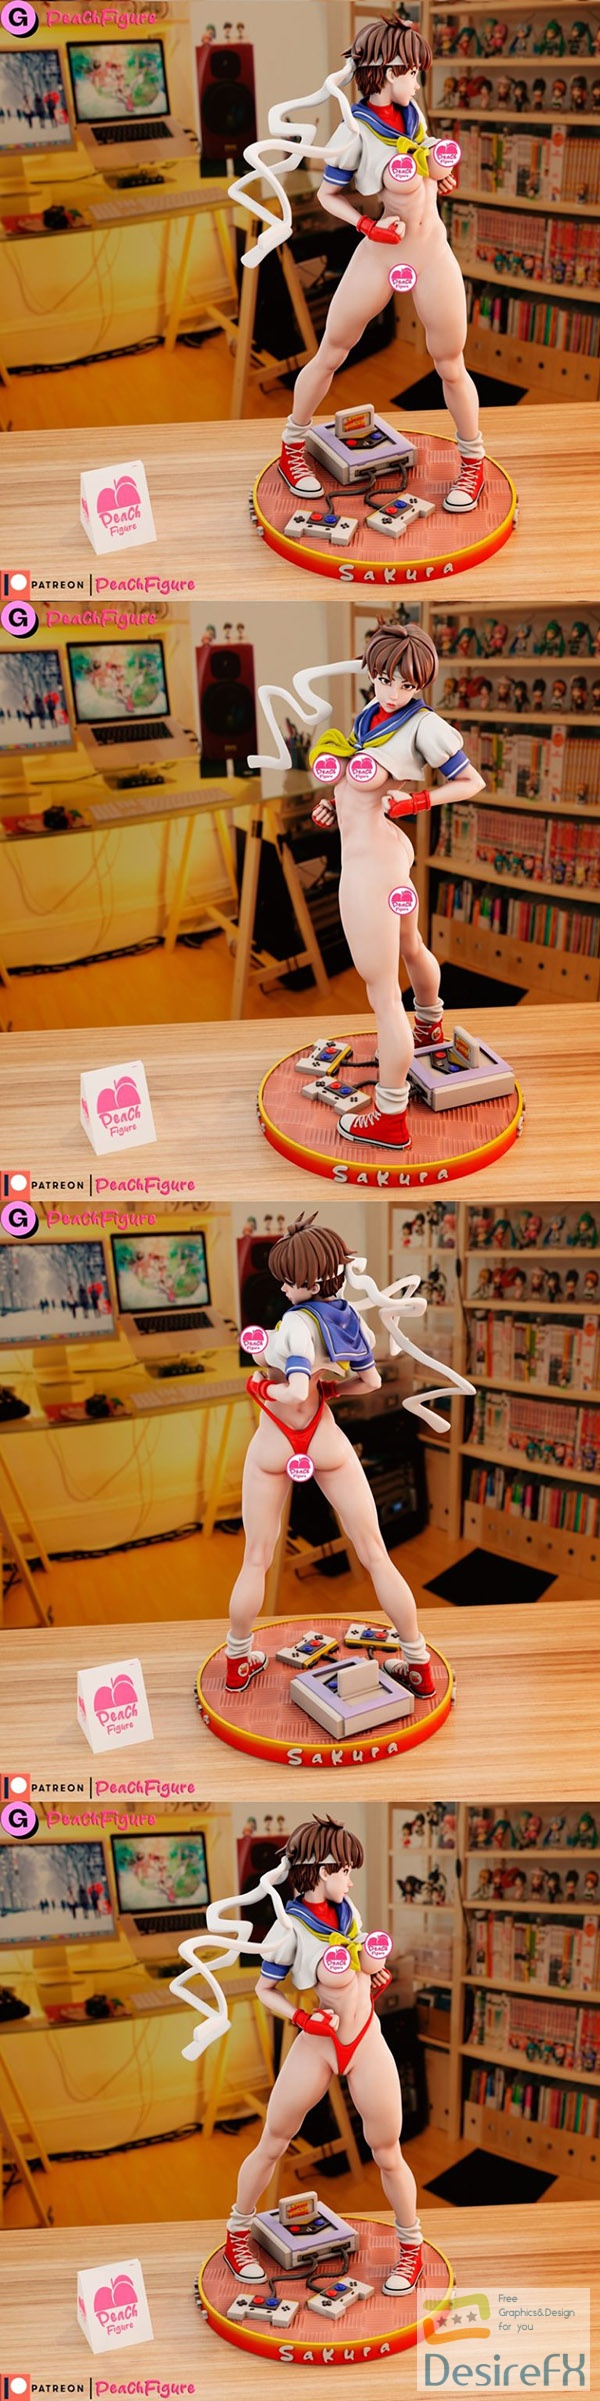 Peach Figure – Sakura Street Fighter – 3D Print